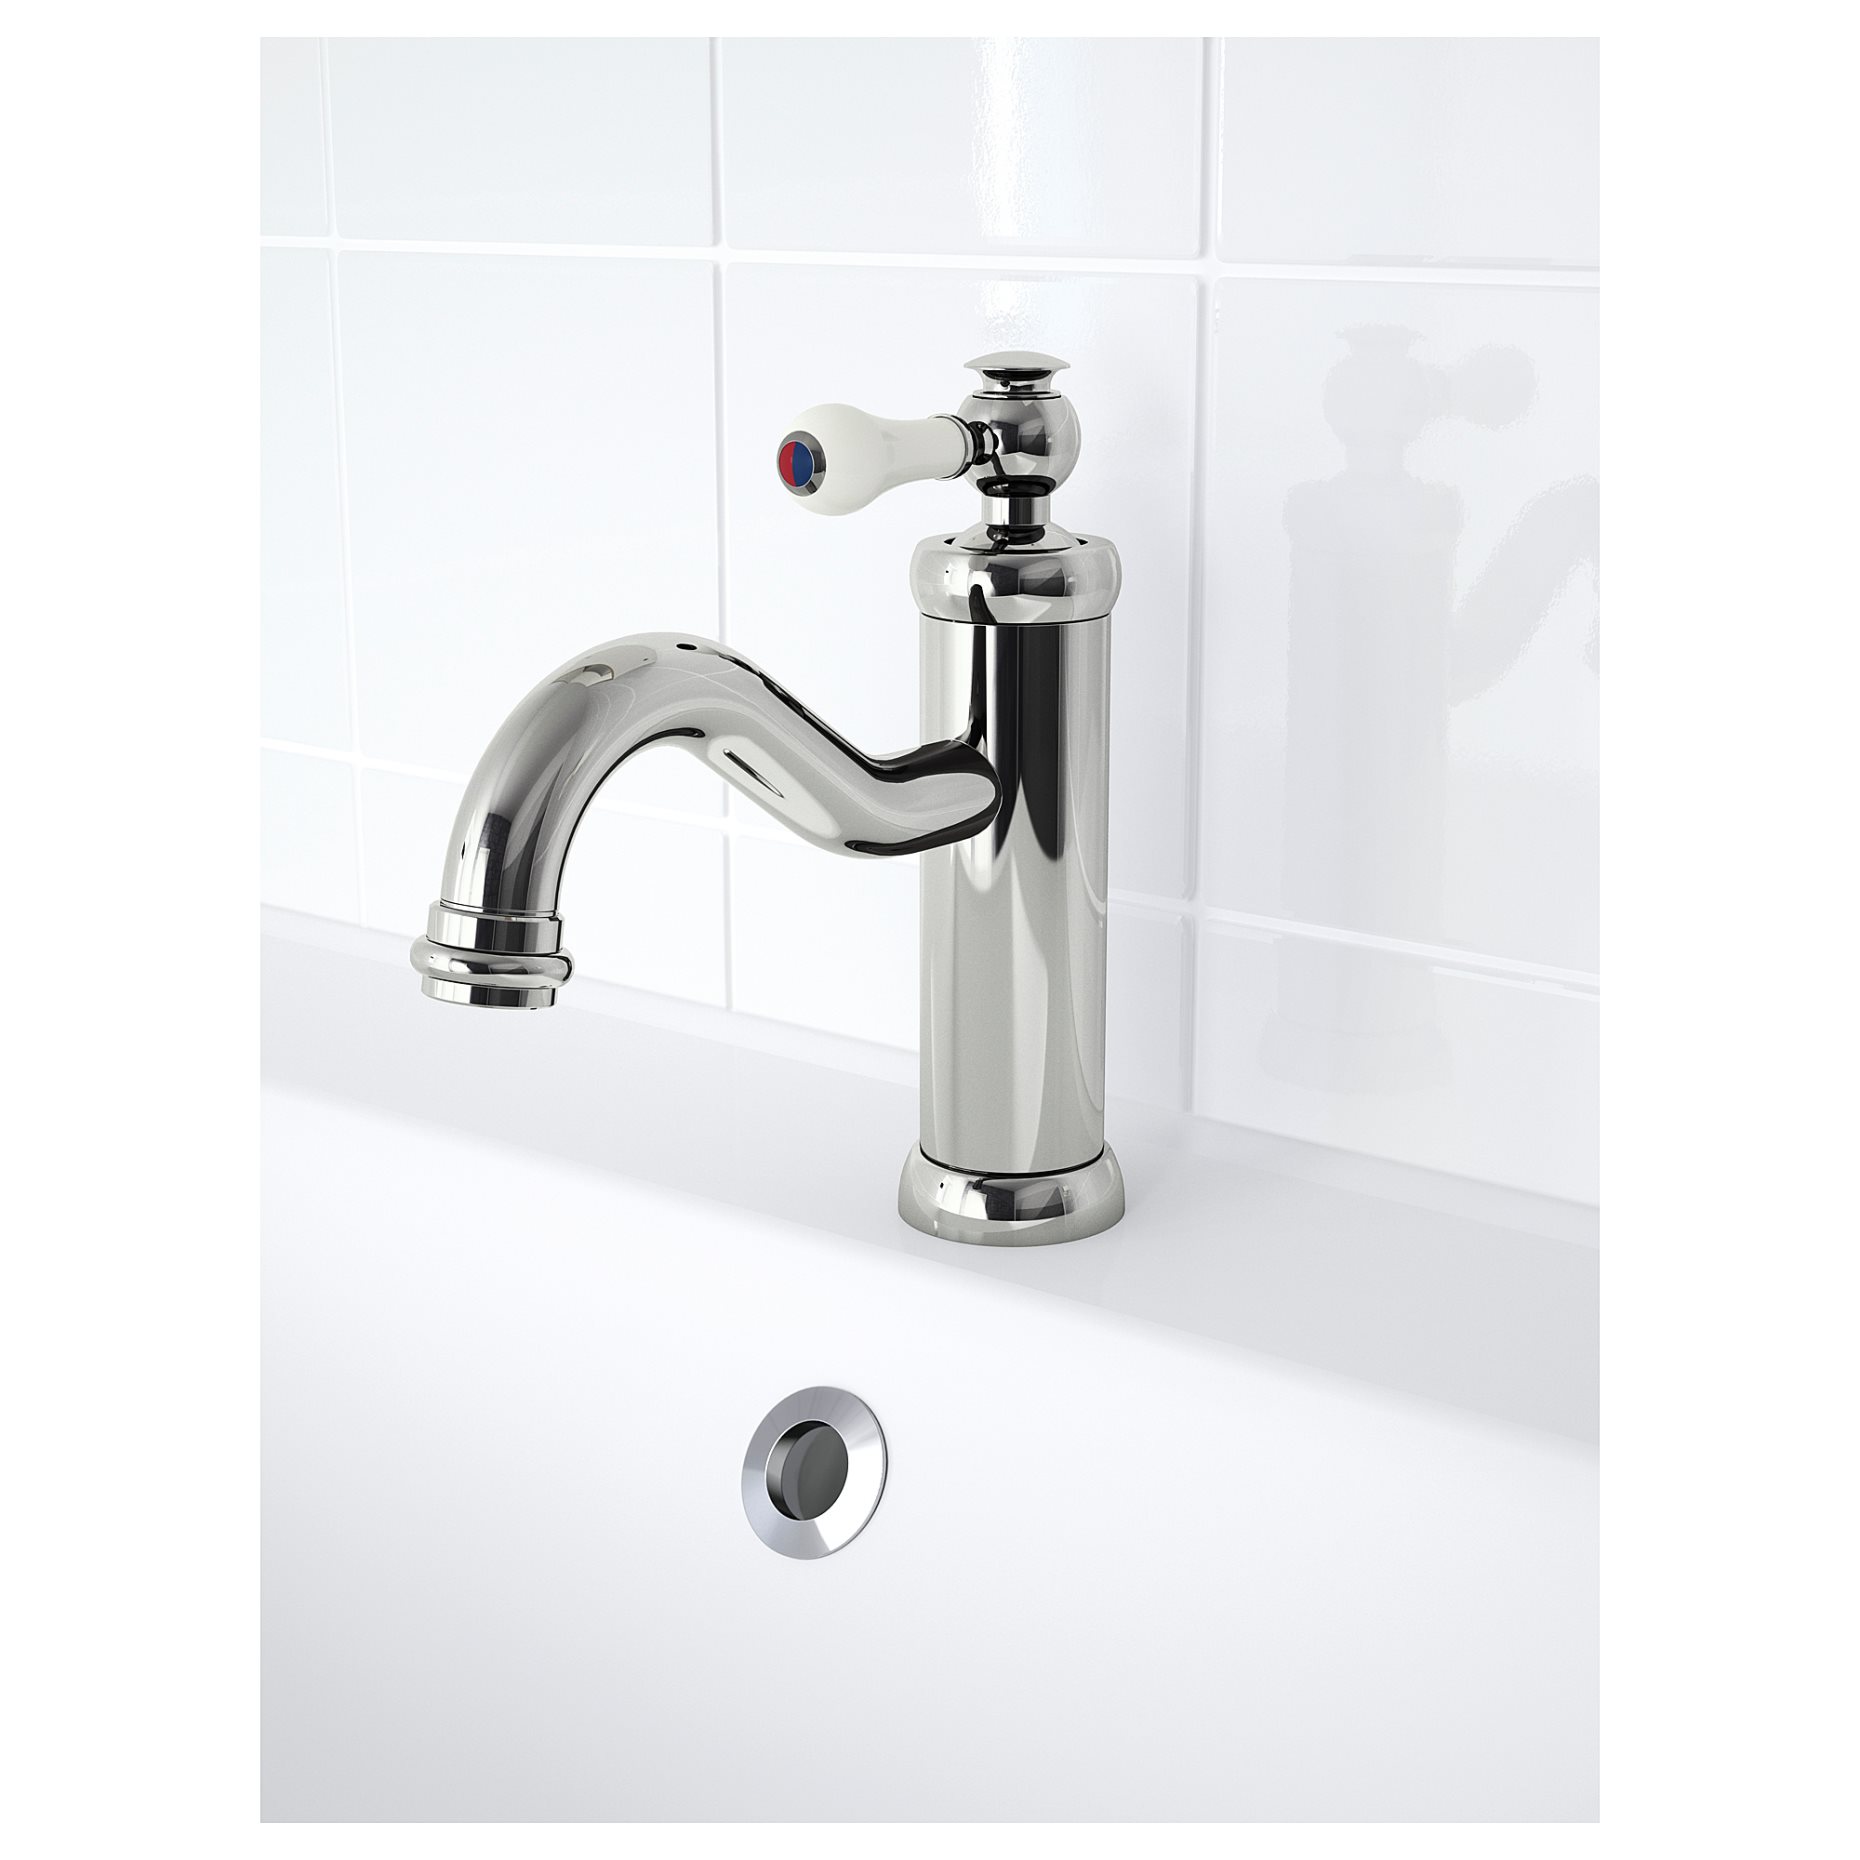 HAMNSKÄR, wash-basin mixer tap with strainer, 803.430.75